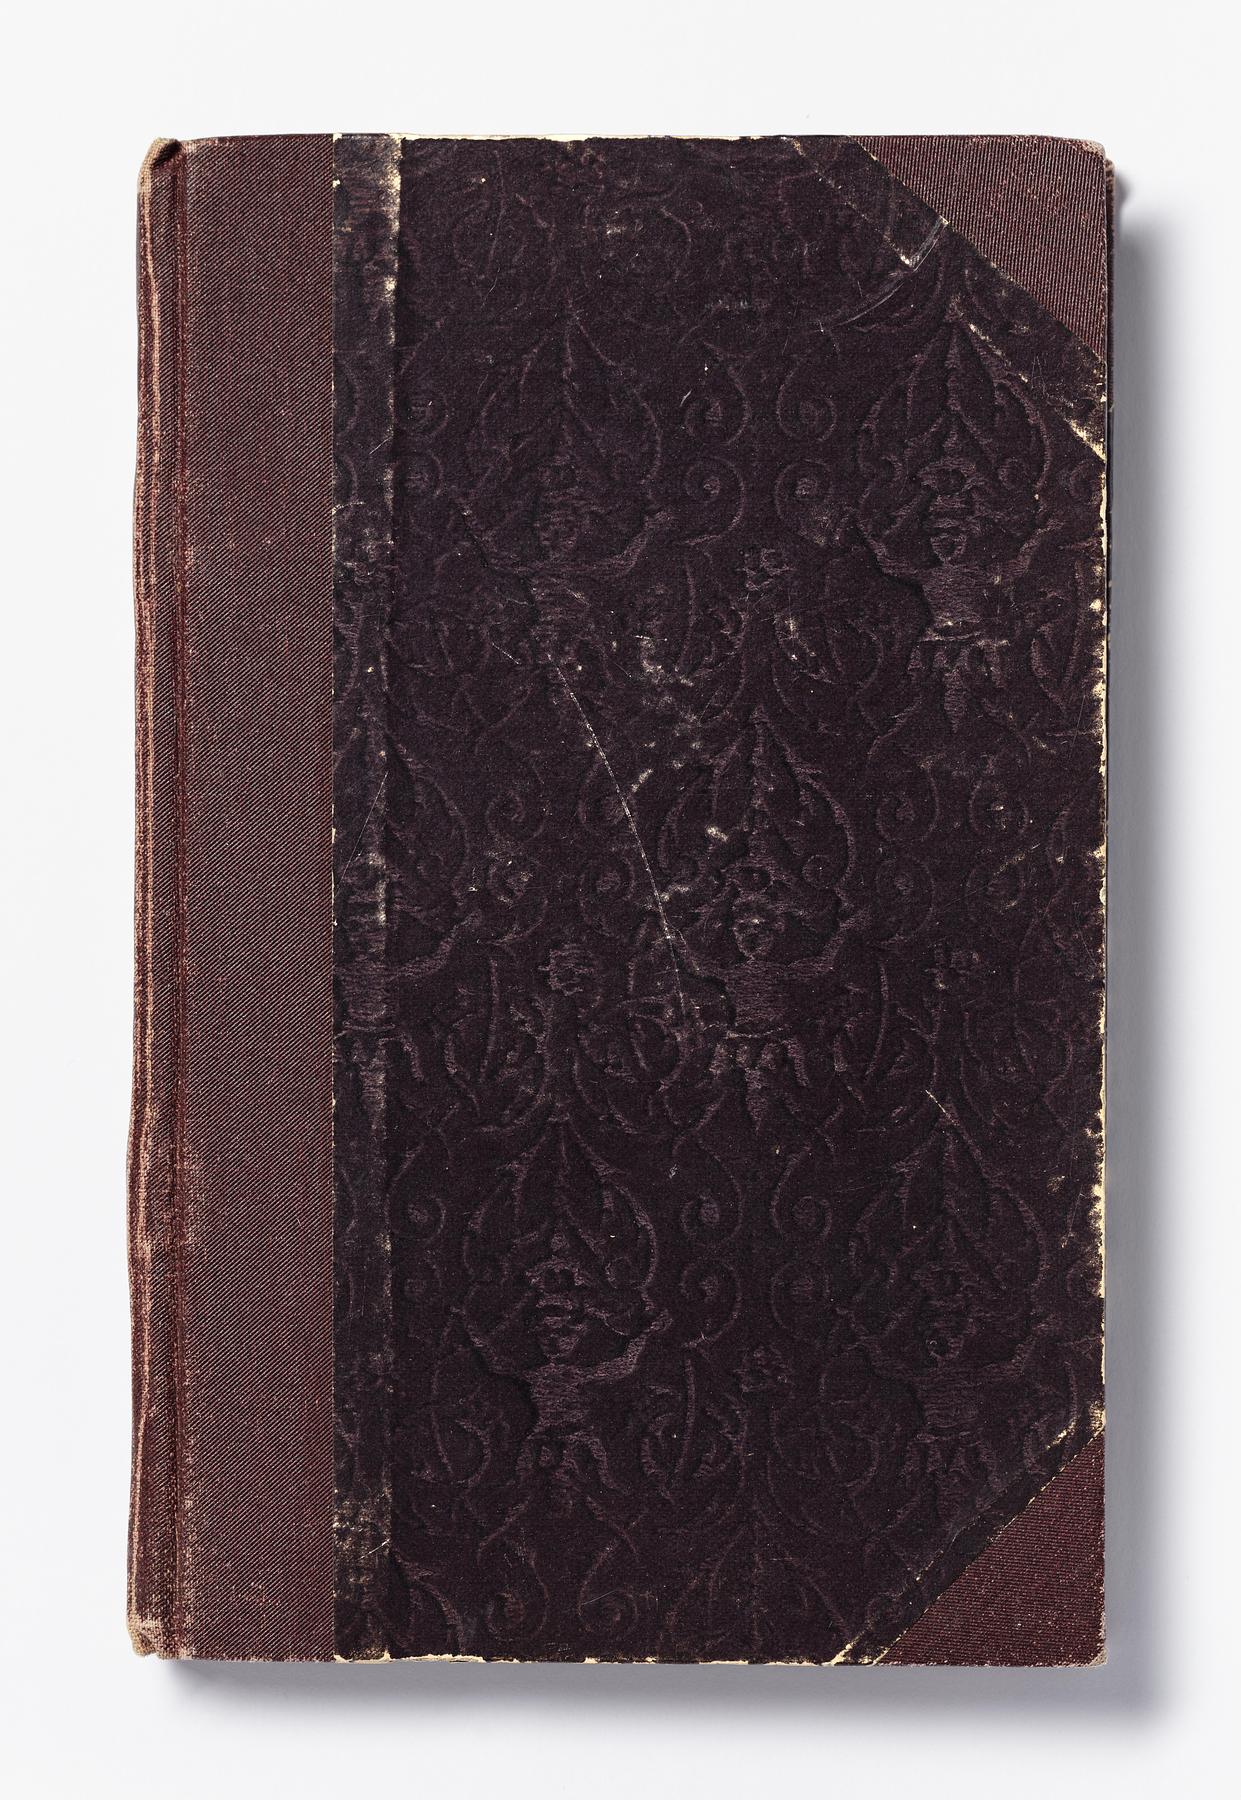 Gottlieb Bindesbøll's sketchbook, D1778,0